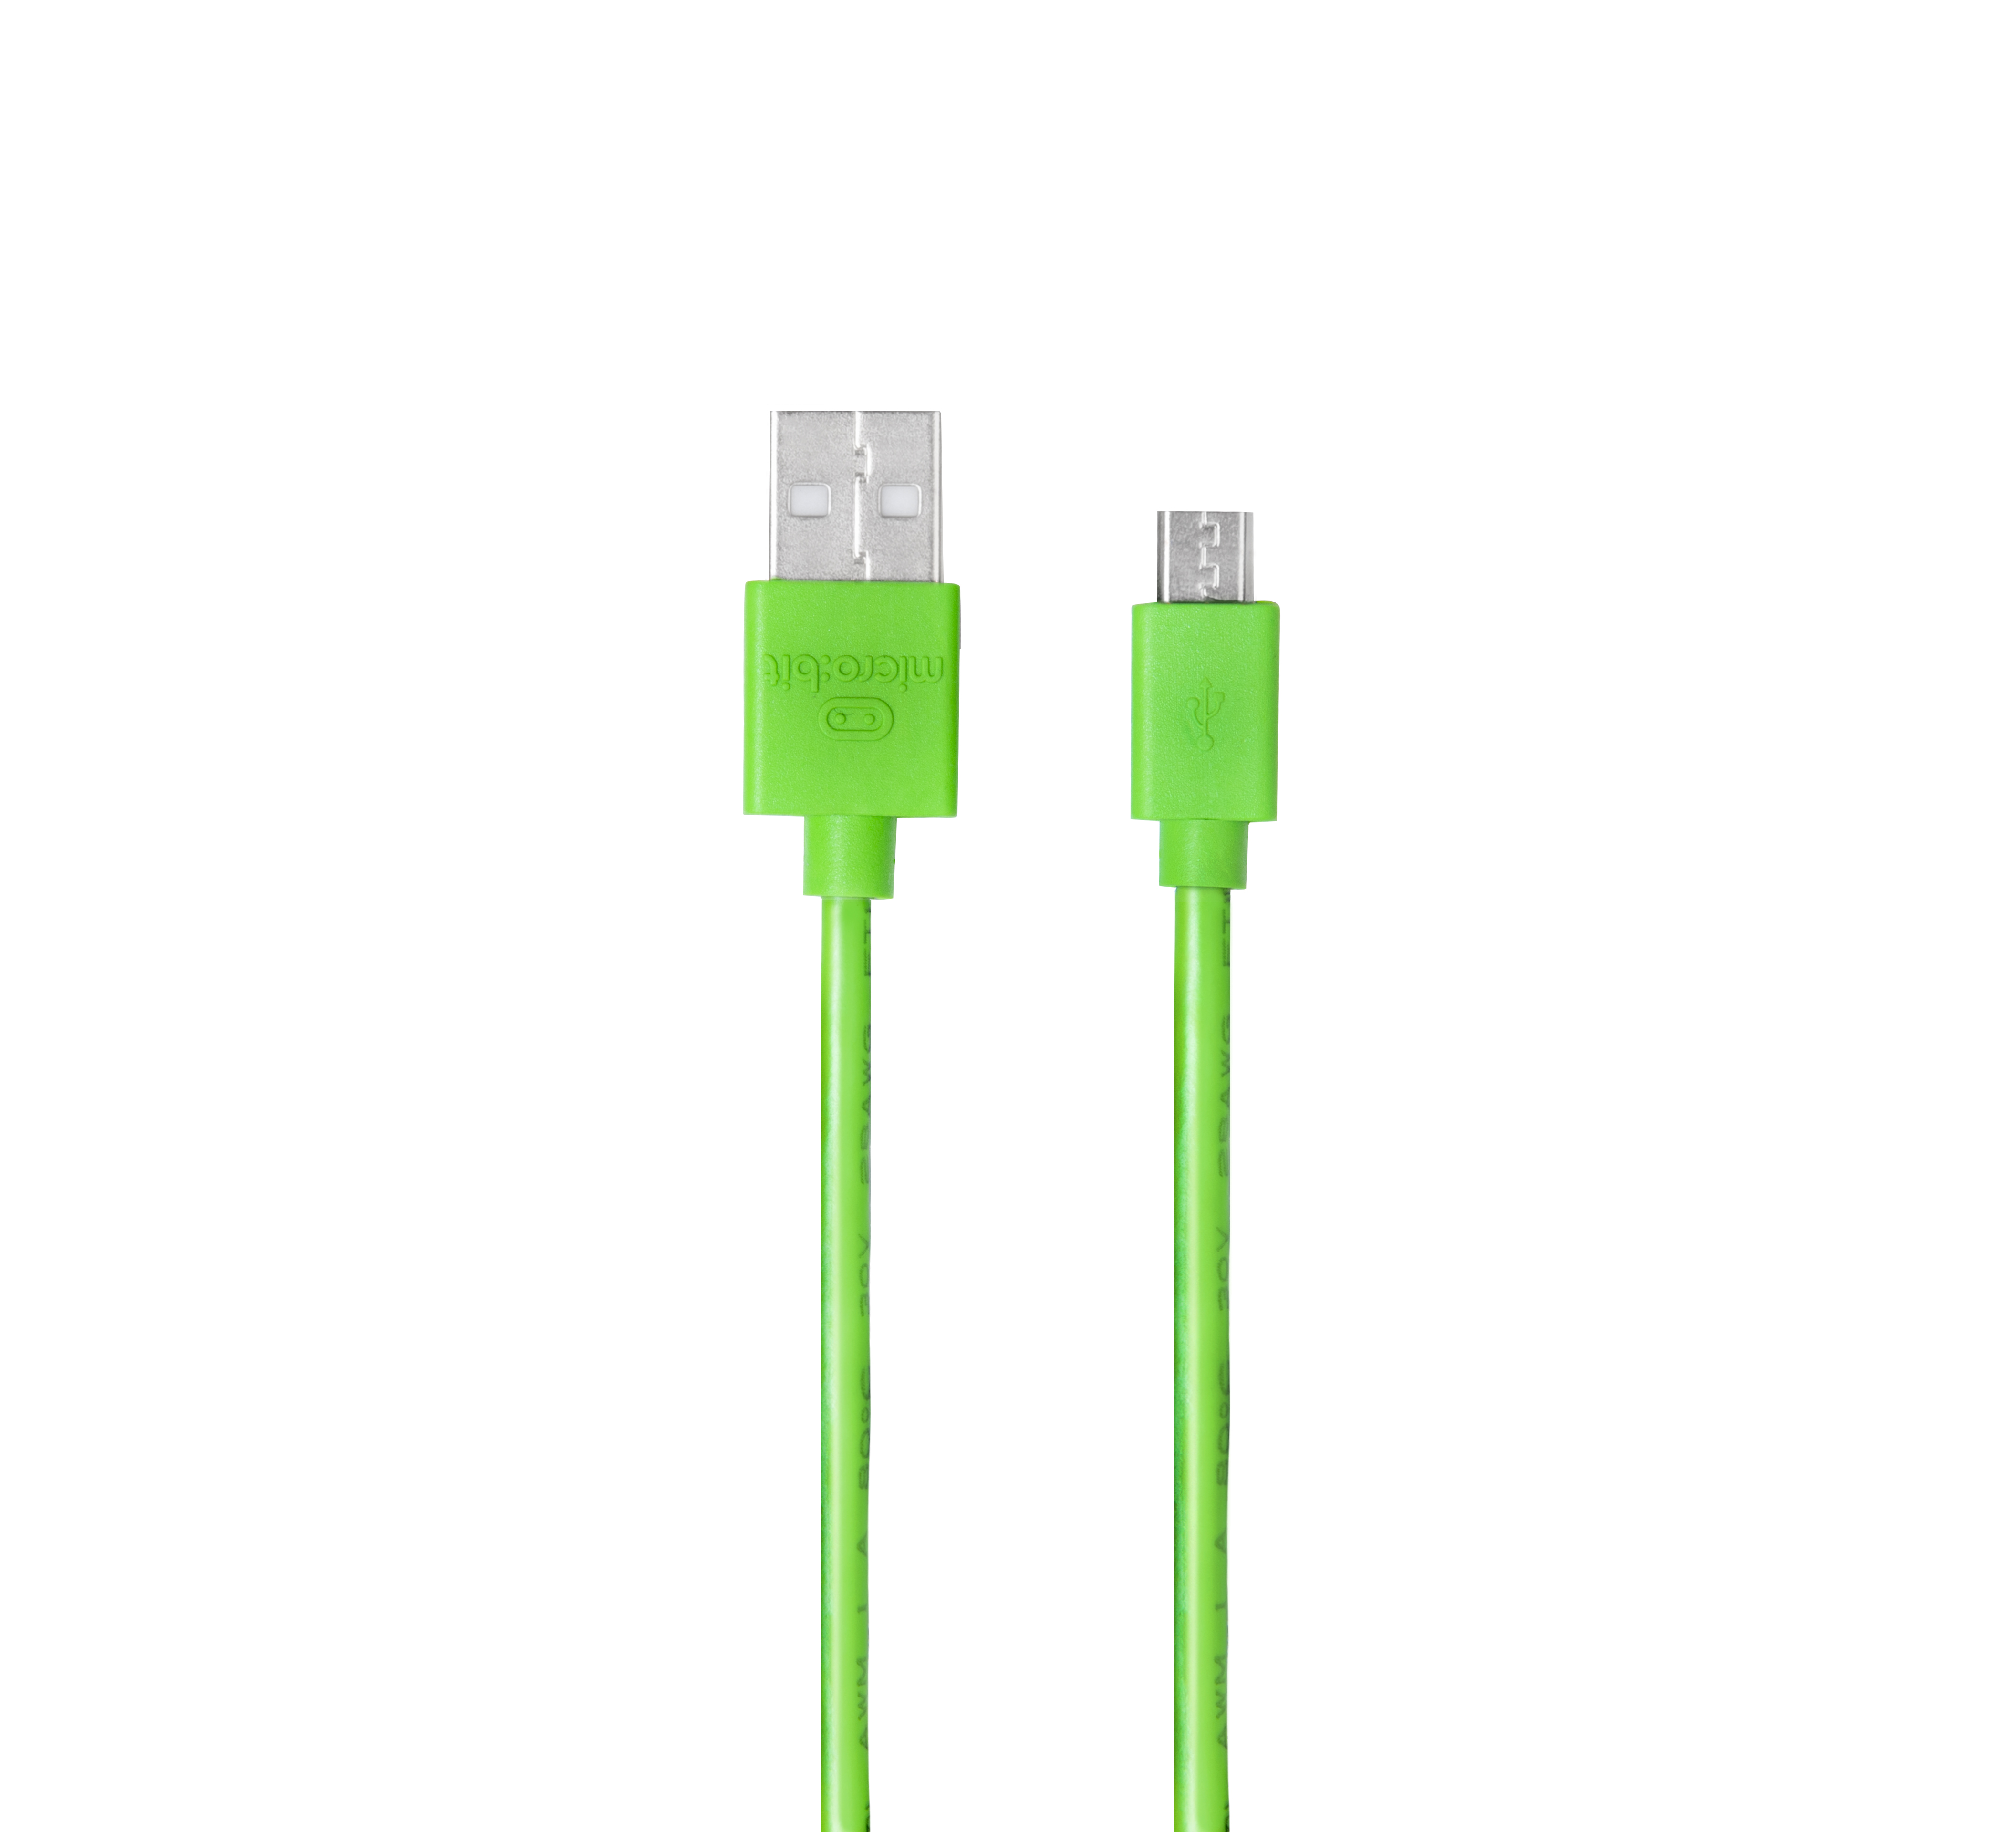 MEFUSBG30AV1 Green USB Cable 1